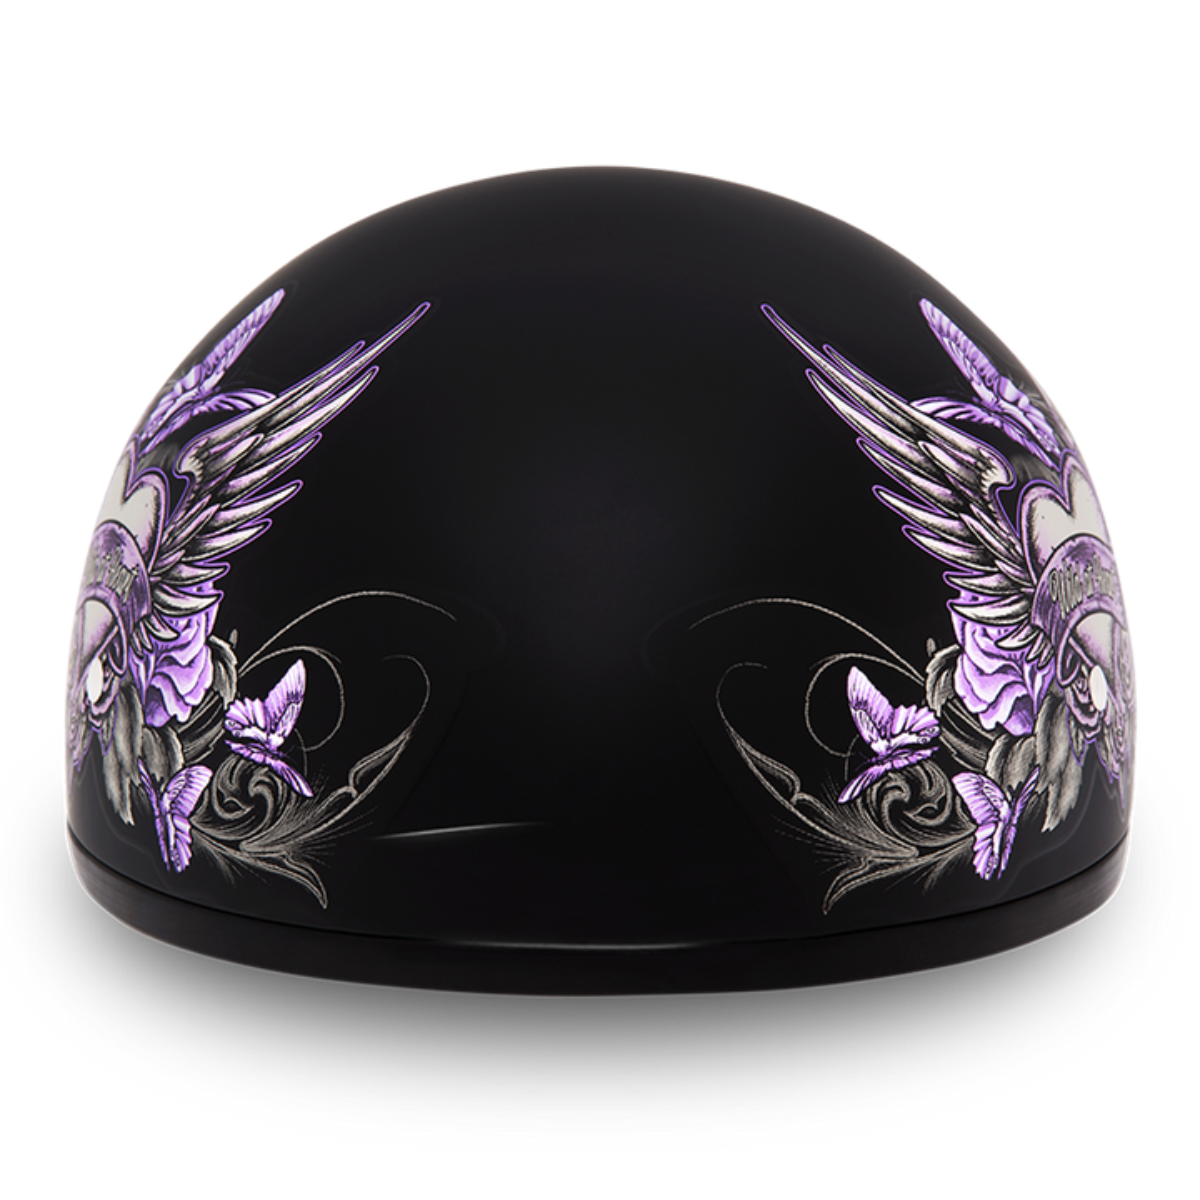 Black Daytona D.O.T Skull Cap Half Shell Helmet with purple wing graphics.